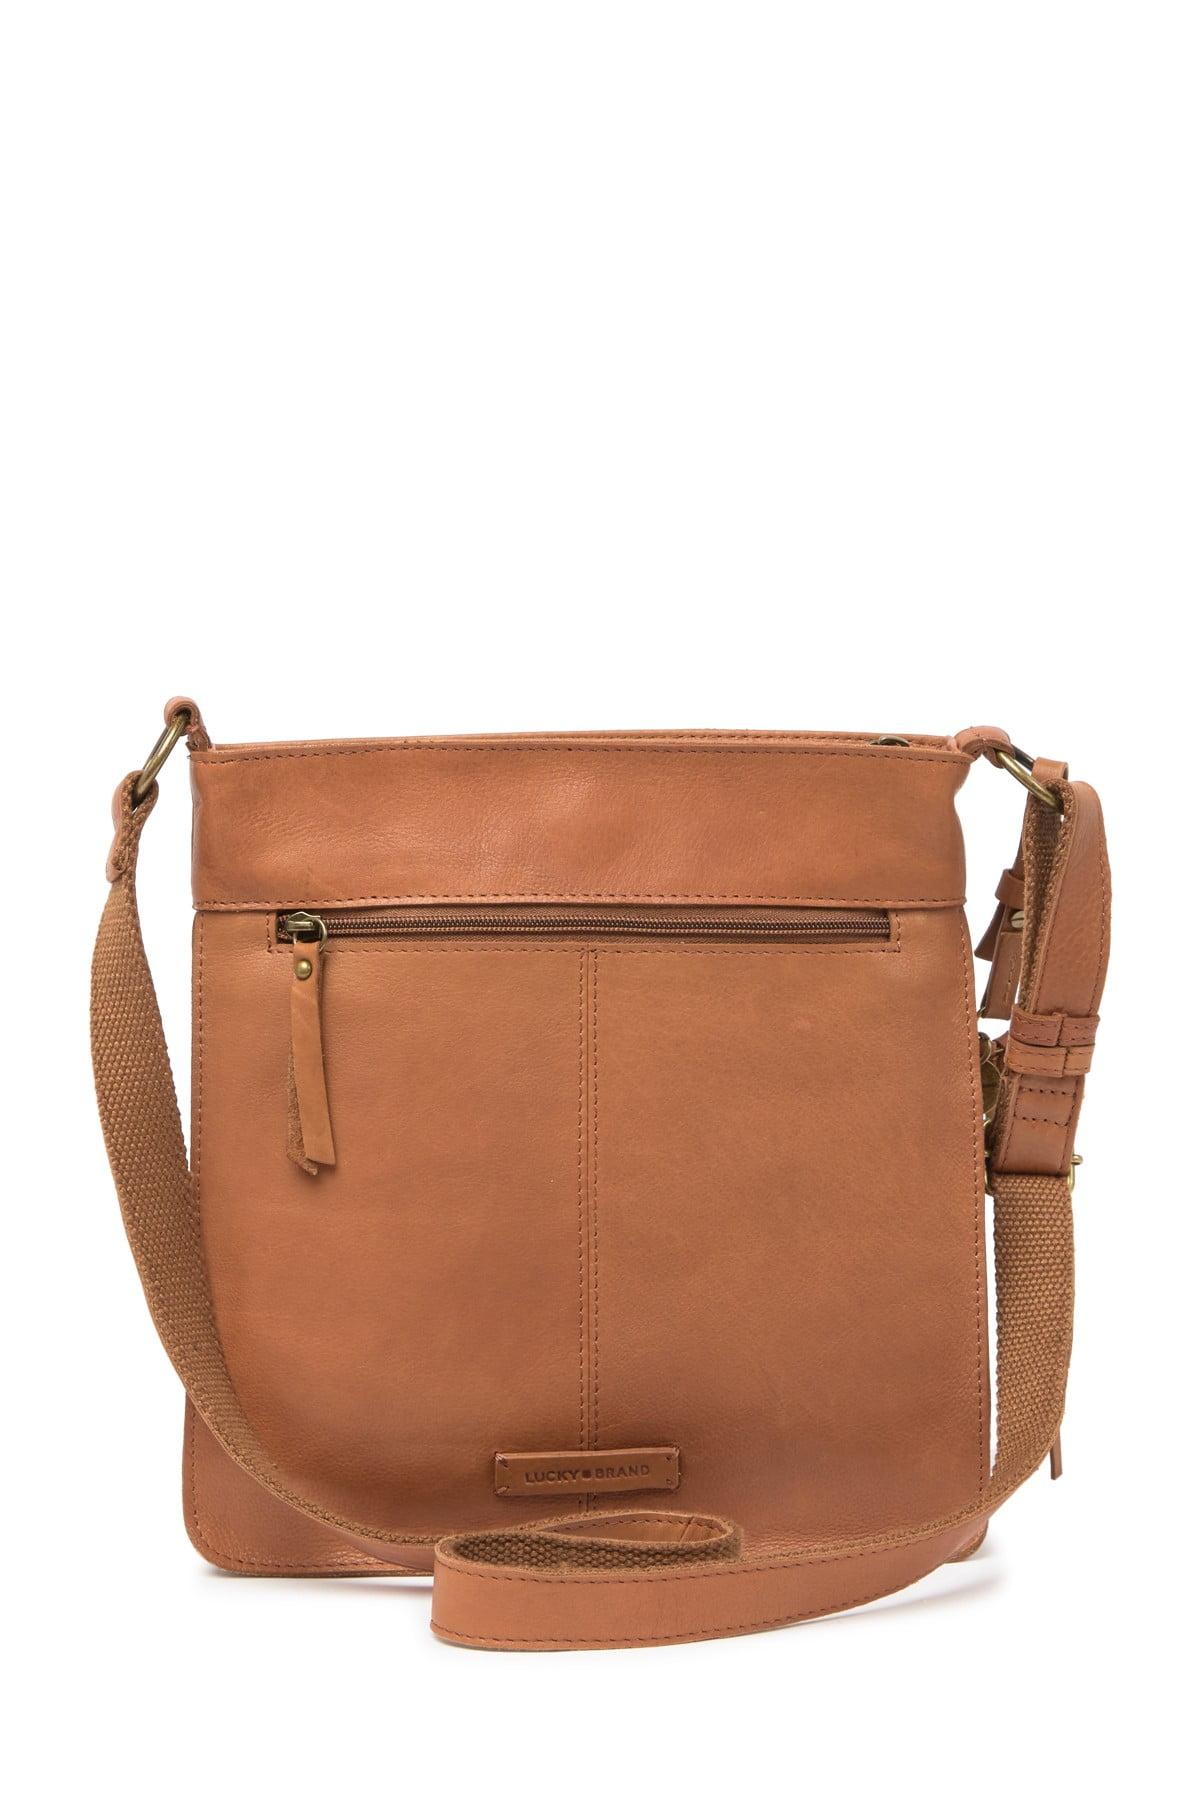 Lucky Brand Rayla Crossbody Bag in Brown